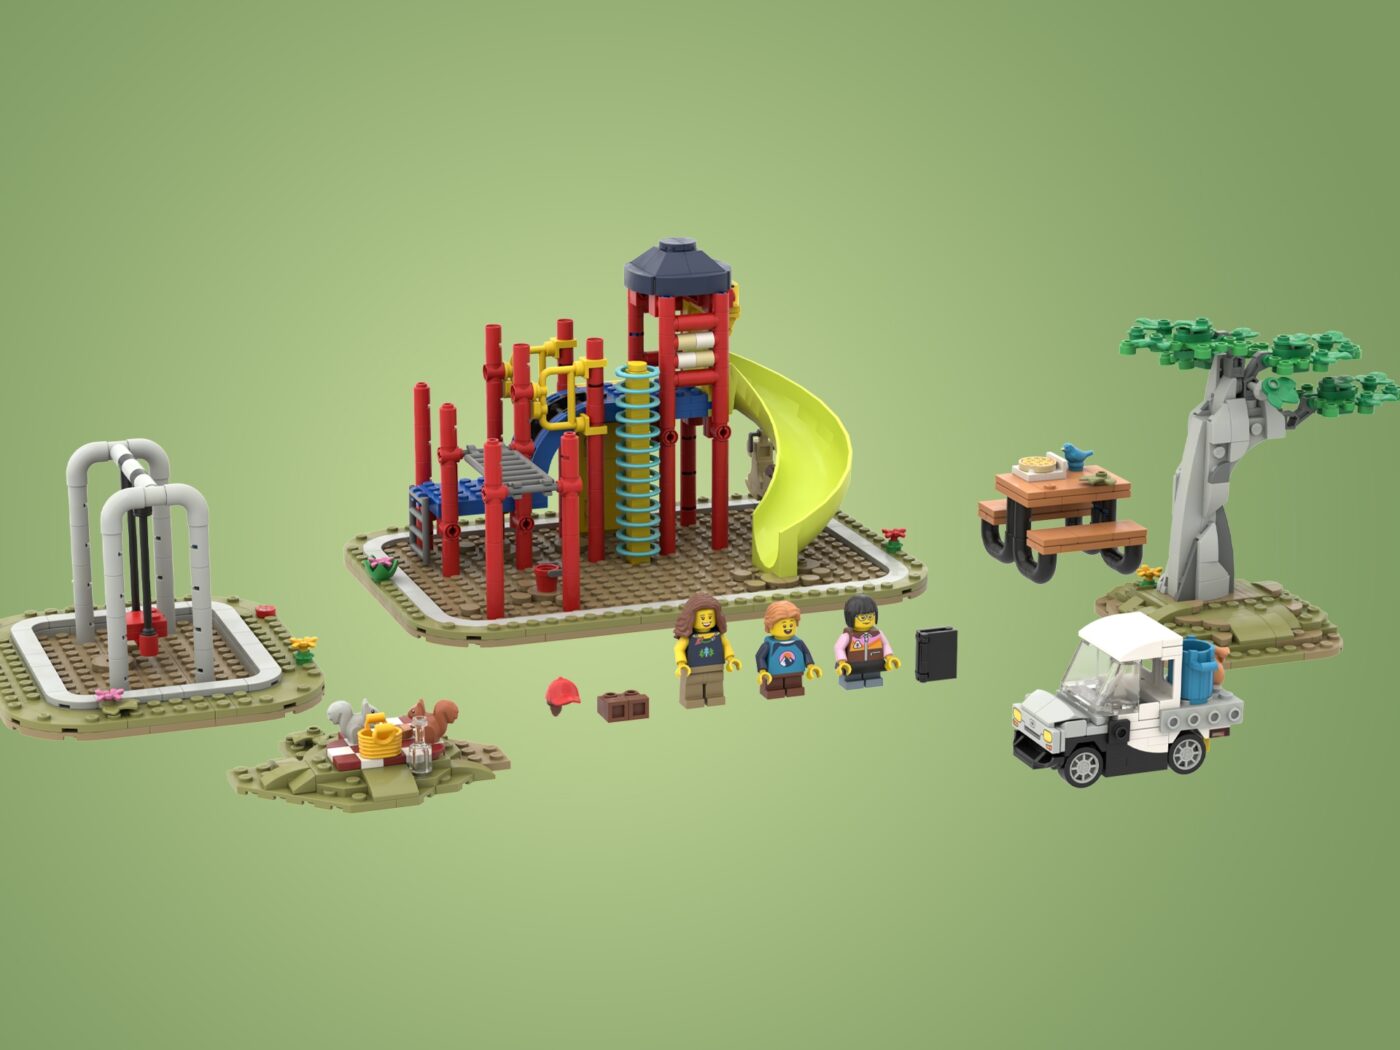 LEGO Bricklink Designer Program Series 2 A Day At the Park